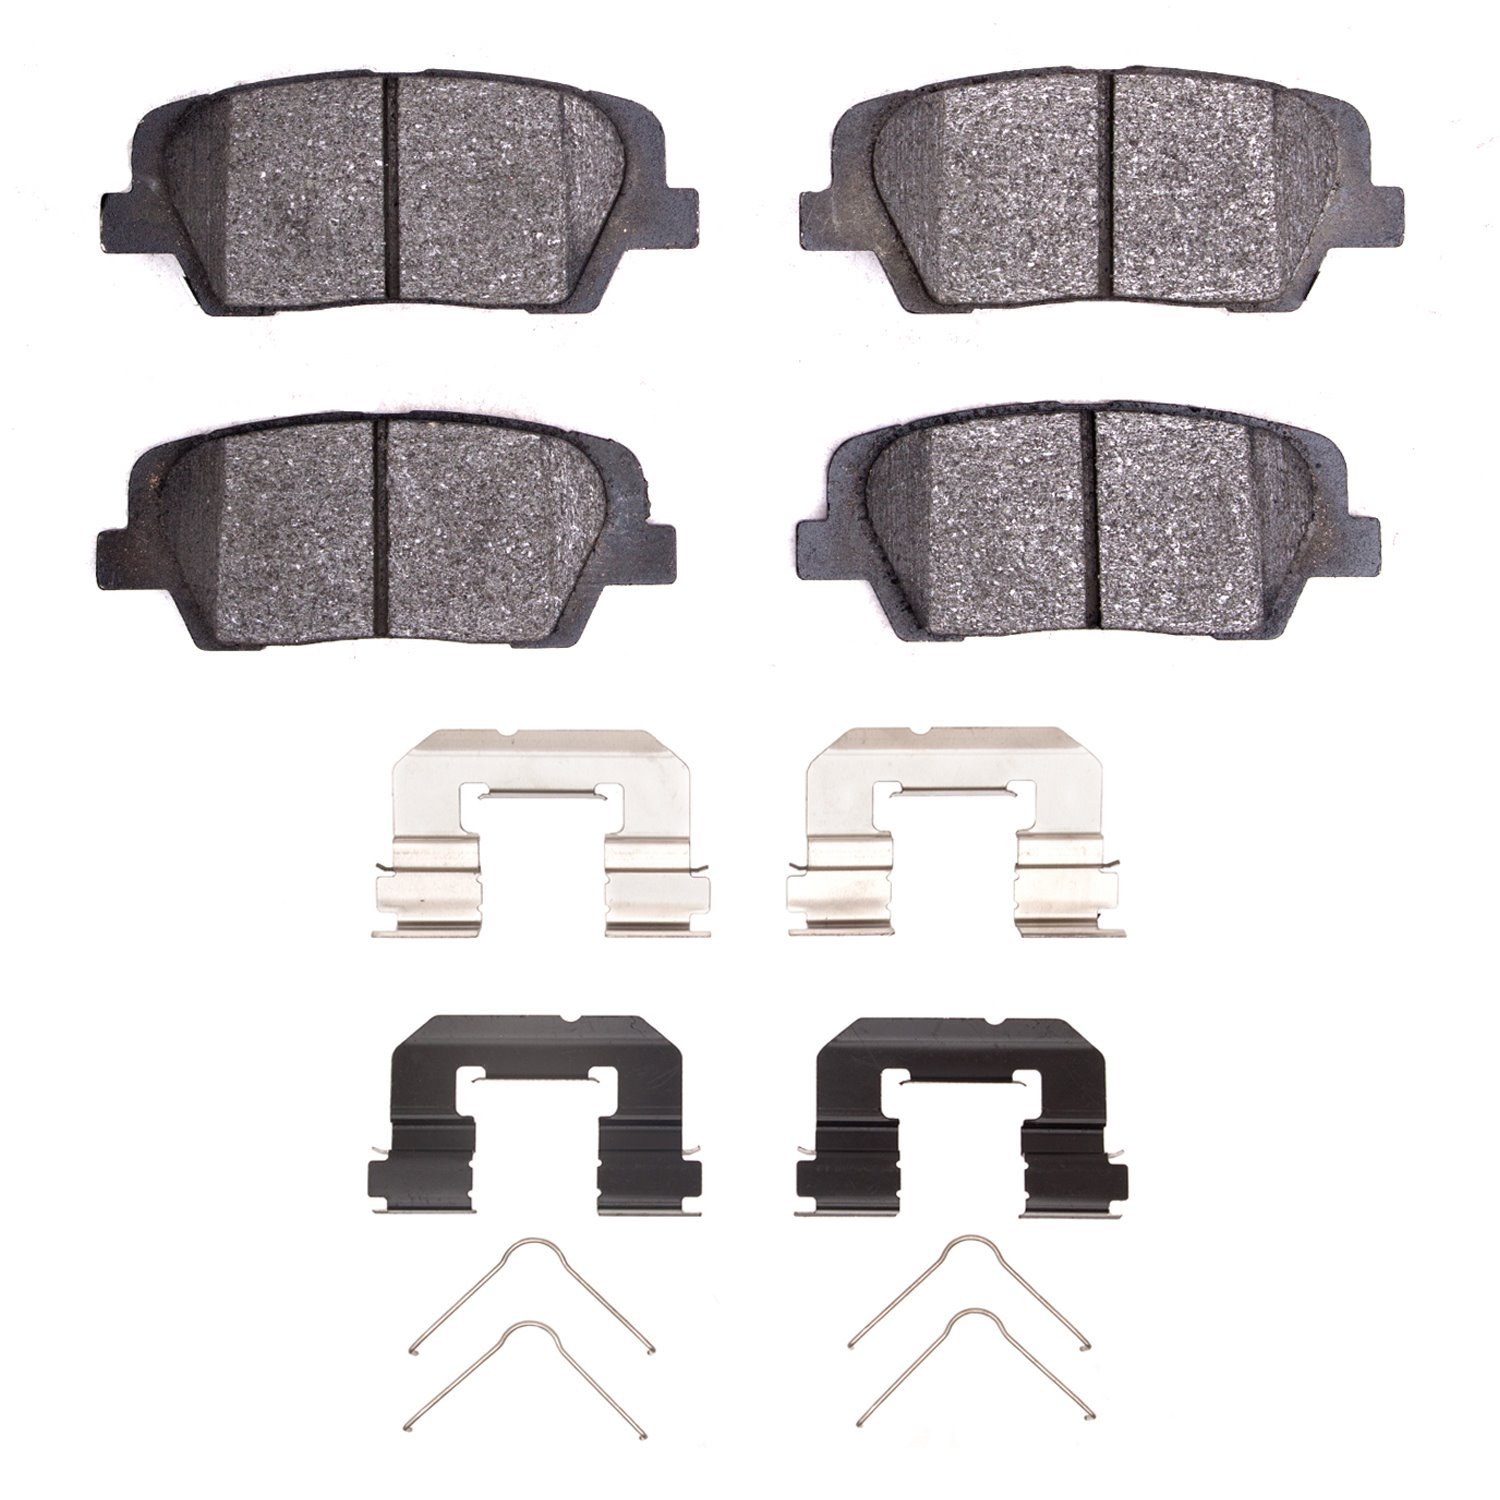 1310-1816-05 3000-Series Ceramic Brake Pads & Hardware Kit, Fits Select Kia/Hyundai/Genesis, Position: Rear